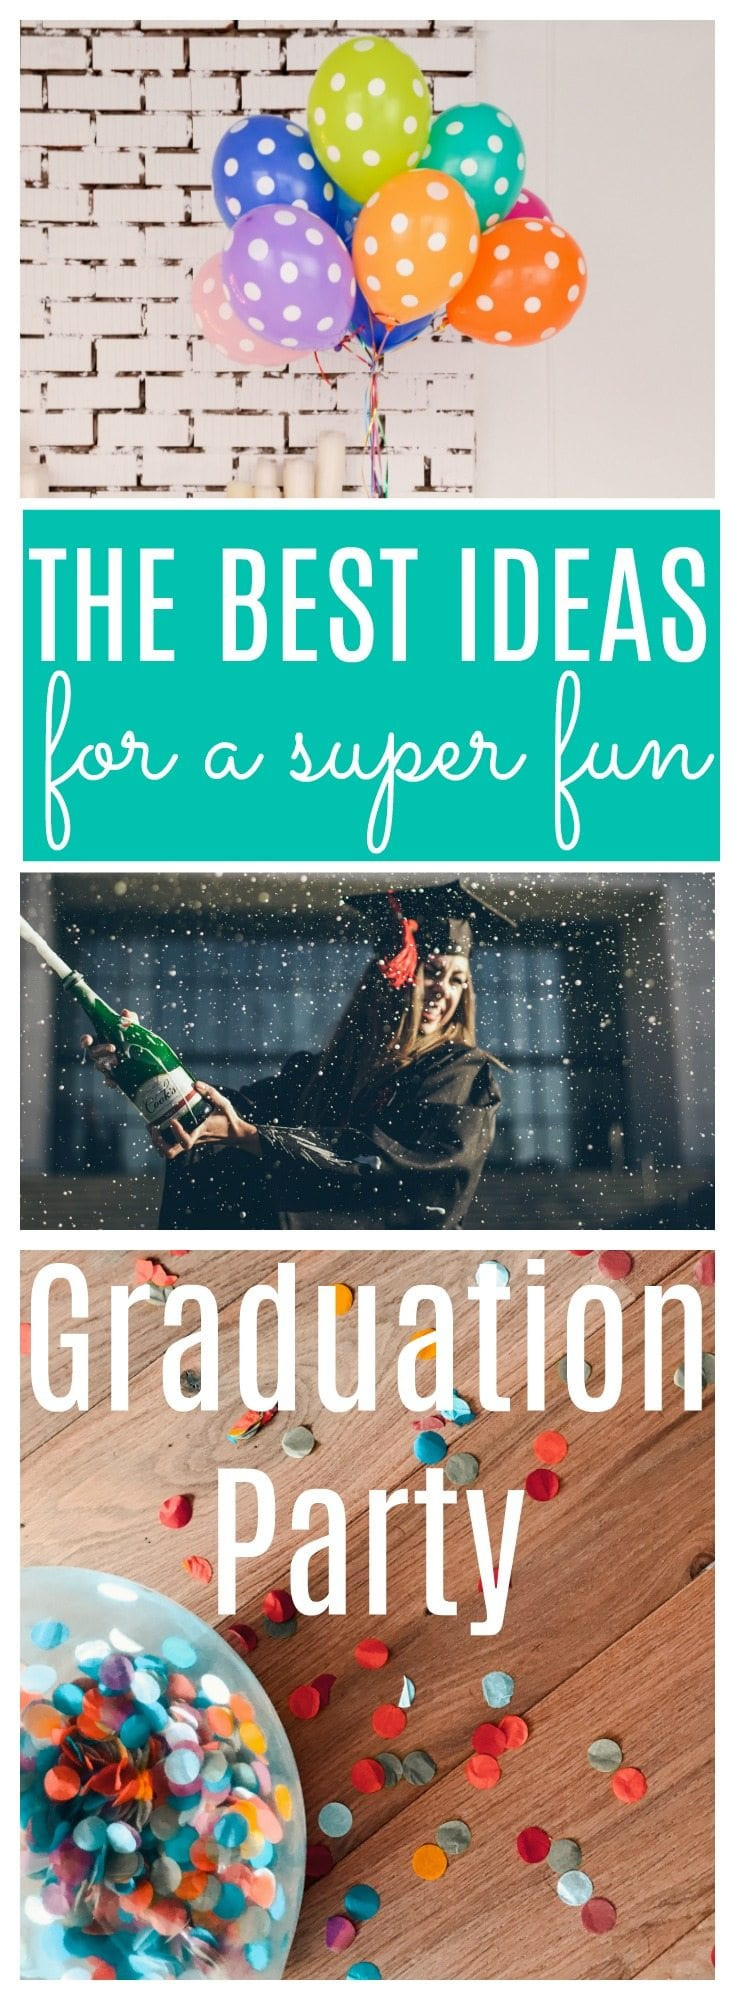 High School Graduation Party Ideas For Him
 Graduation Party Ideas How to Celebrate Your Senior s Big Day